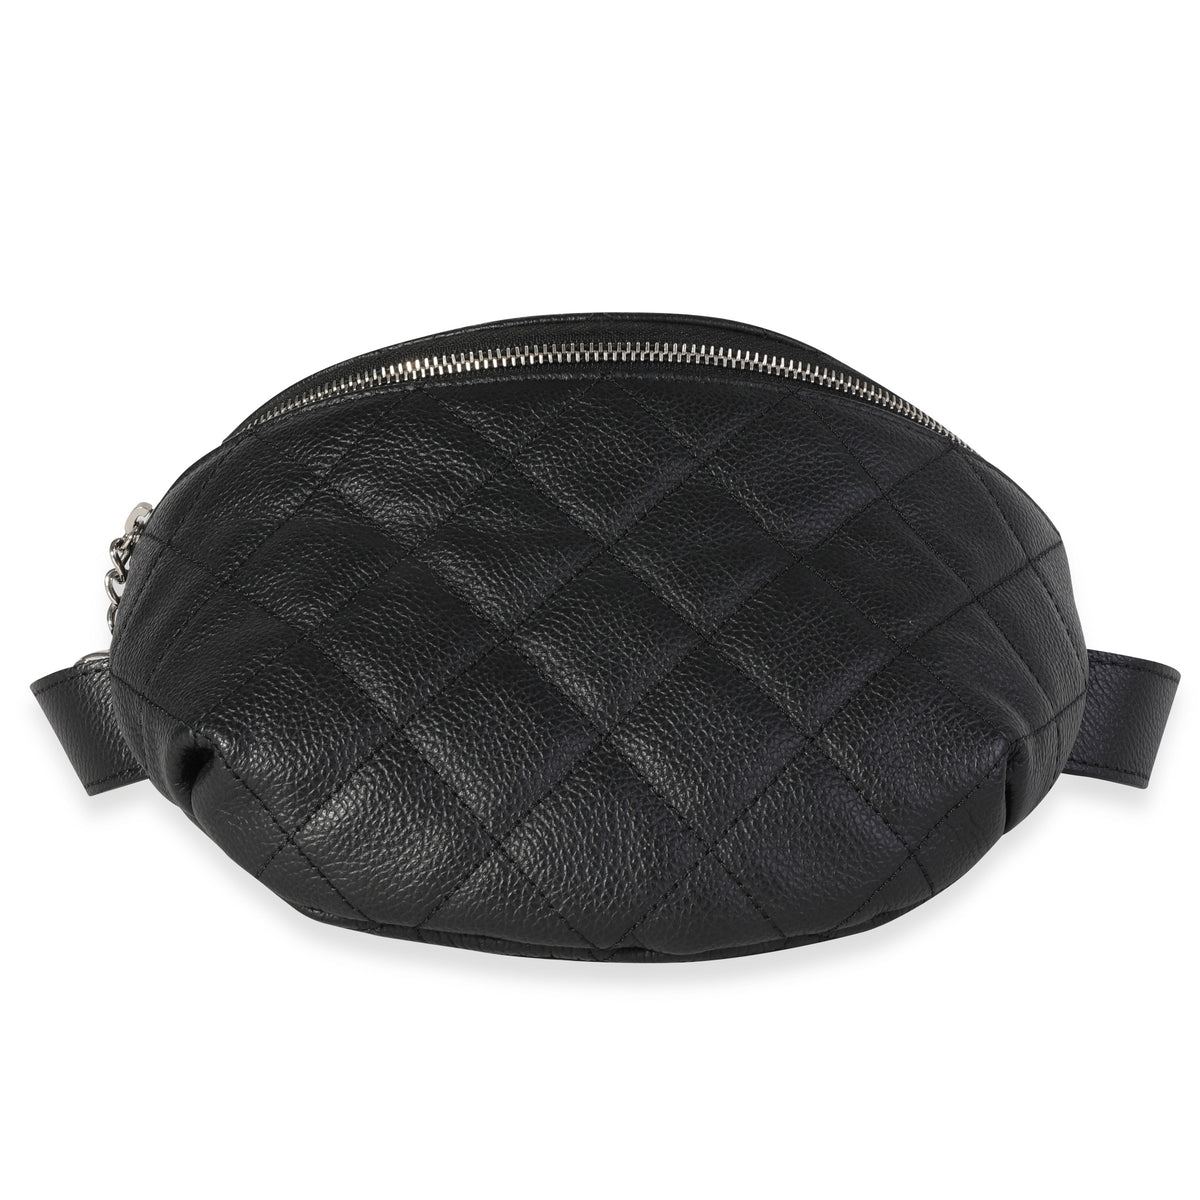 Chanel Quilted Belt Bum Bag Black Calfskin Silver Hardware Uniform  Coco  Approved Studio